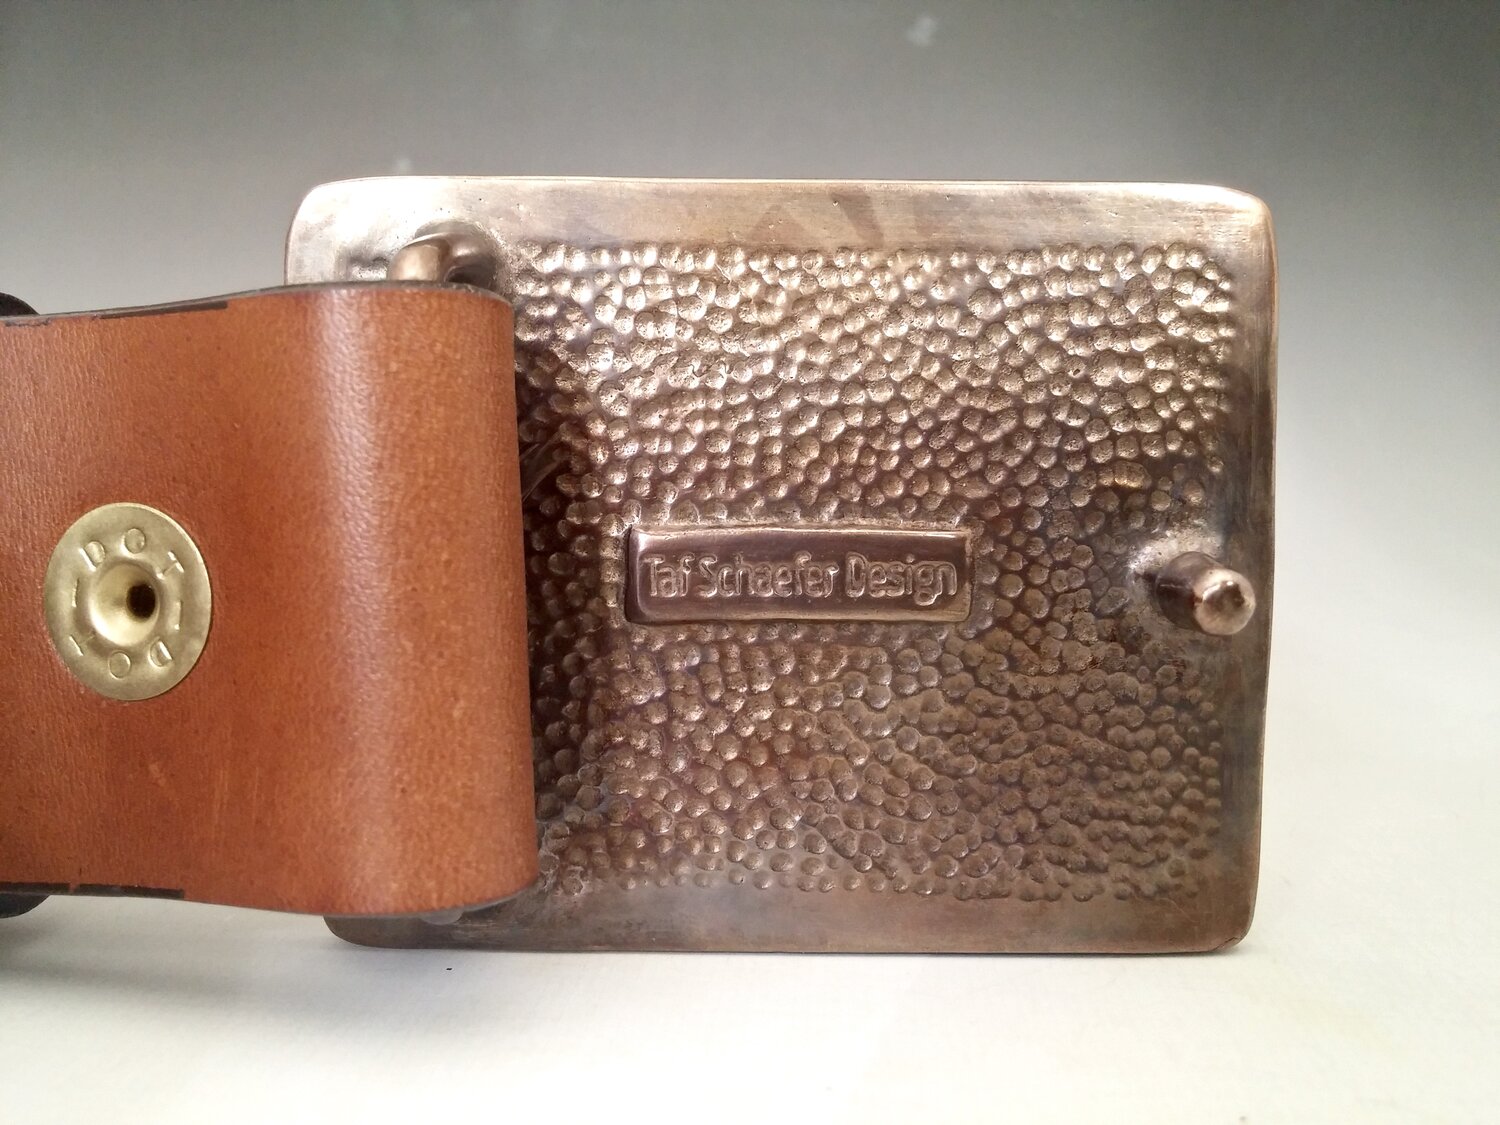 leaf belt buckle – Metal Belt Buckles, Accessories & Home Decor by WATTO  Distinctive Metal Wear